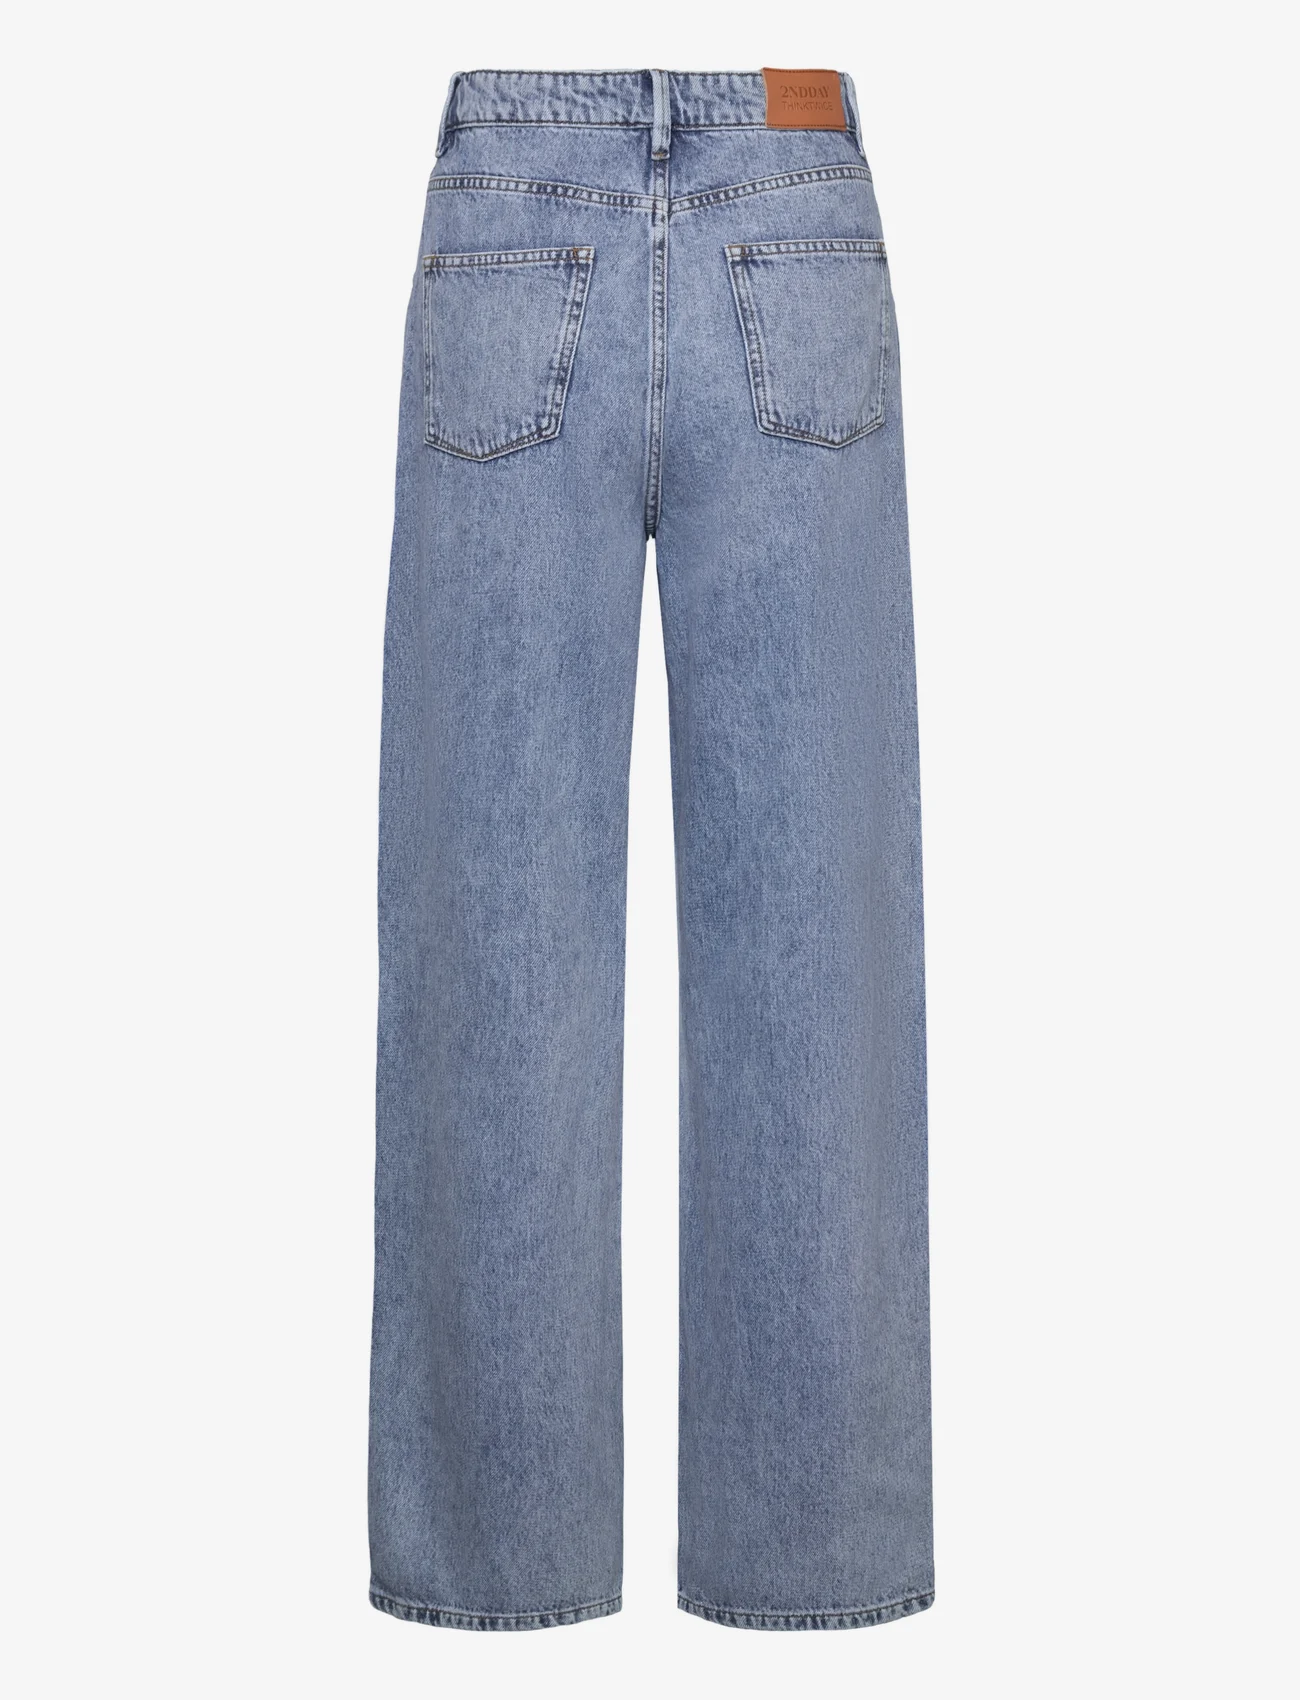 2NDDAY - 2ND Fennec TT - Ocean Blue Denim - jeans met wijde pijpen - light blue - 1